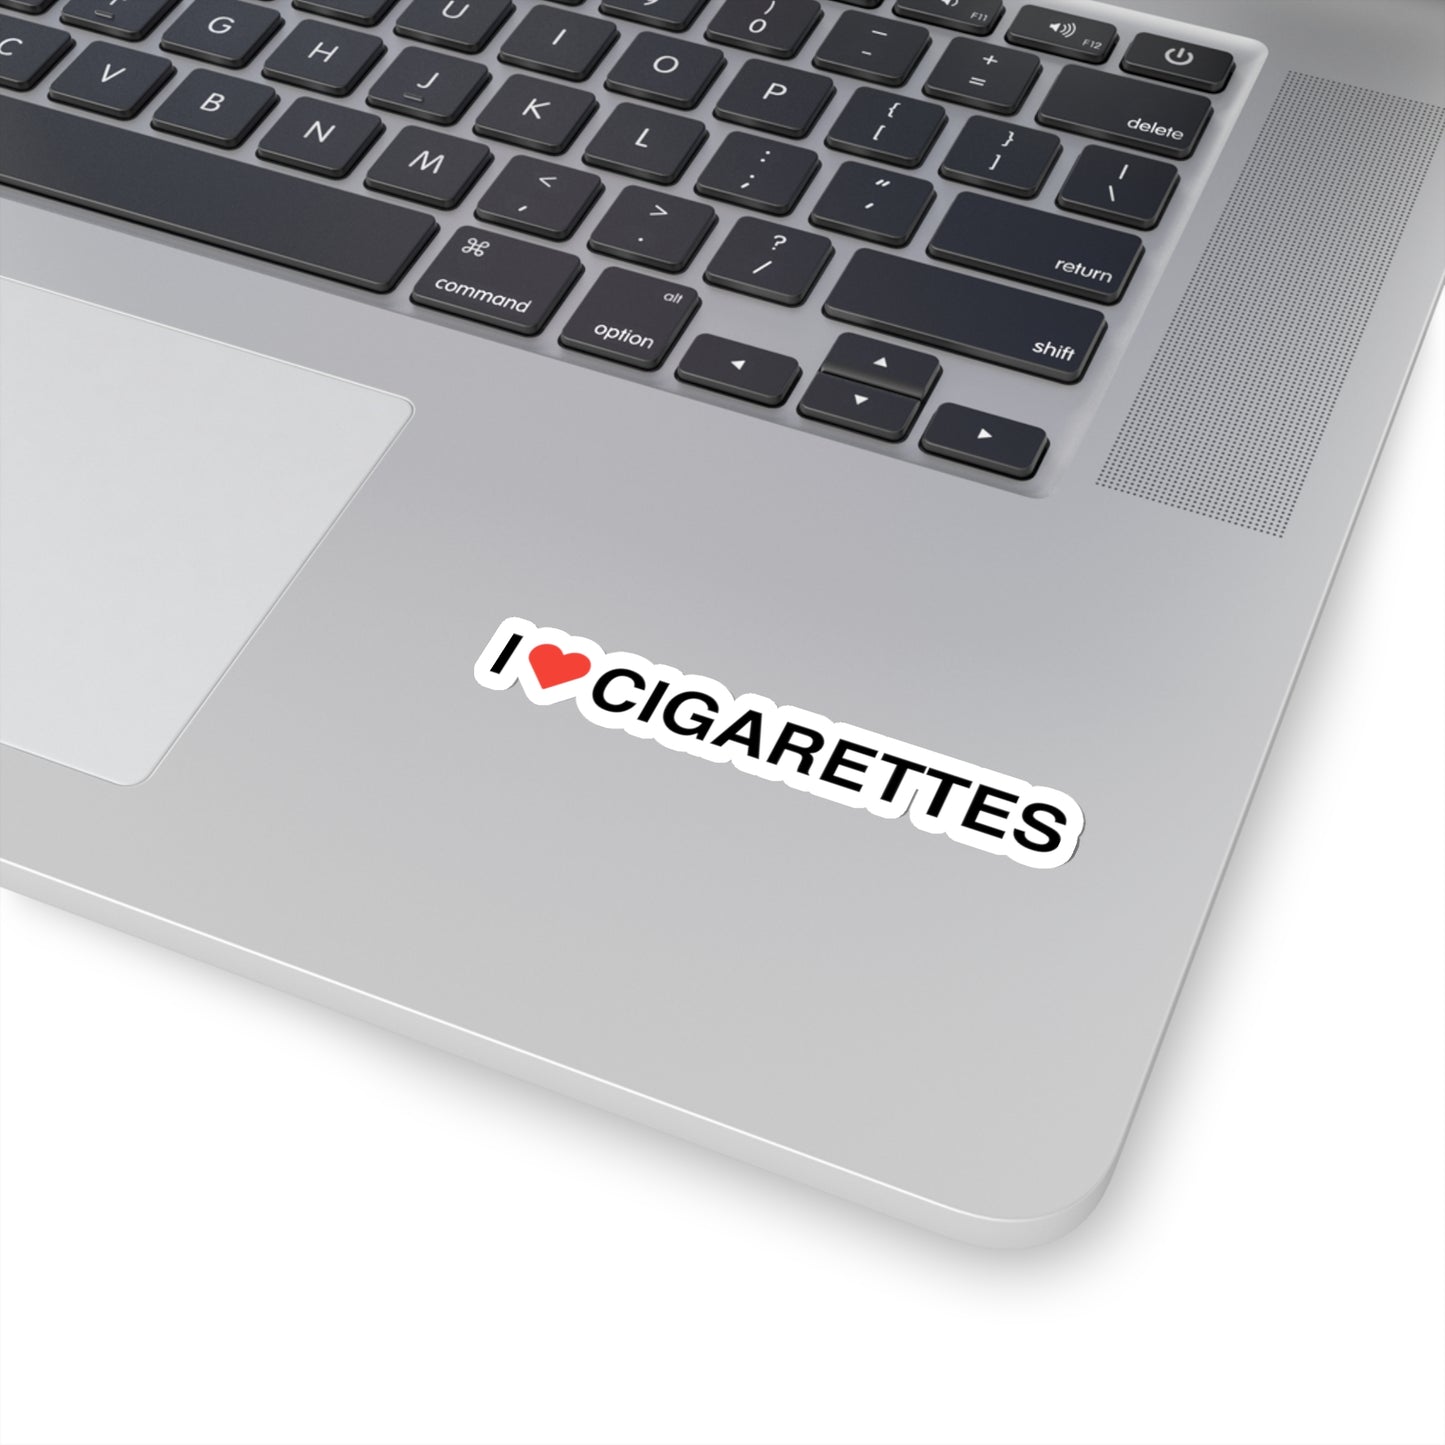 I Love Cigarettes, I Heart Smoking Cigarettes, Funny Meme Sticker